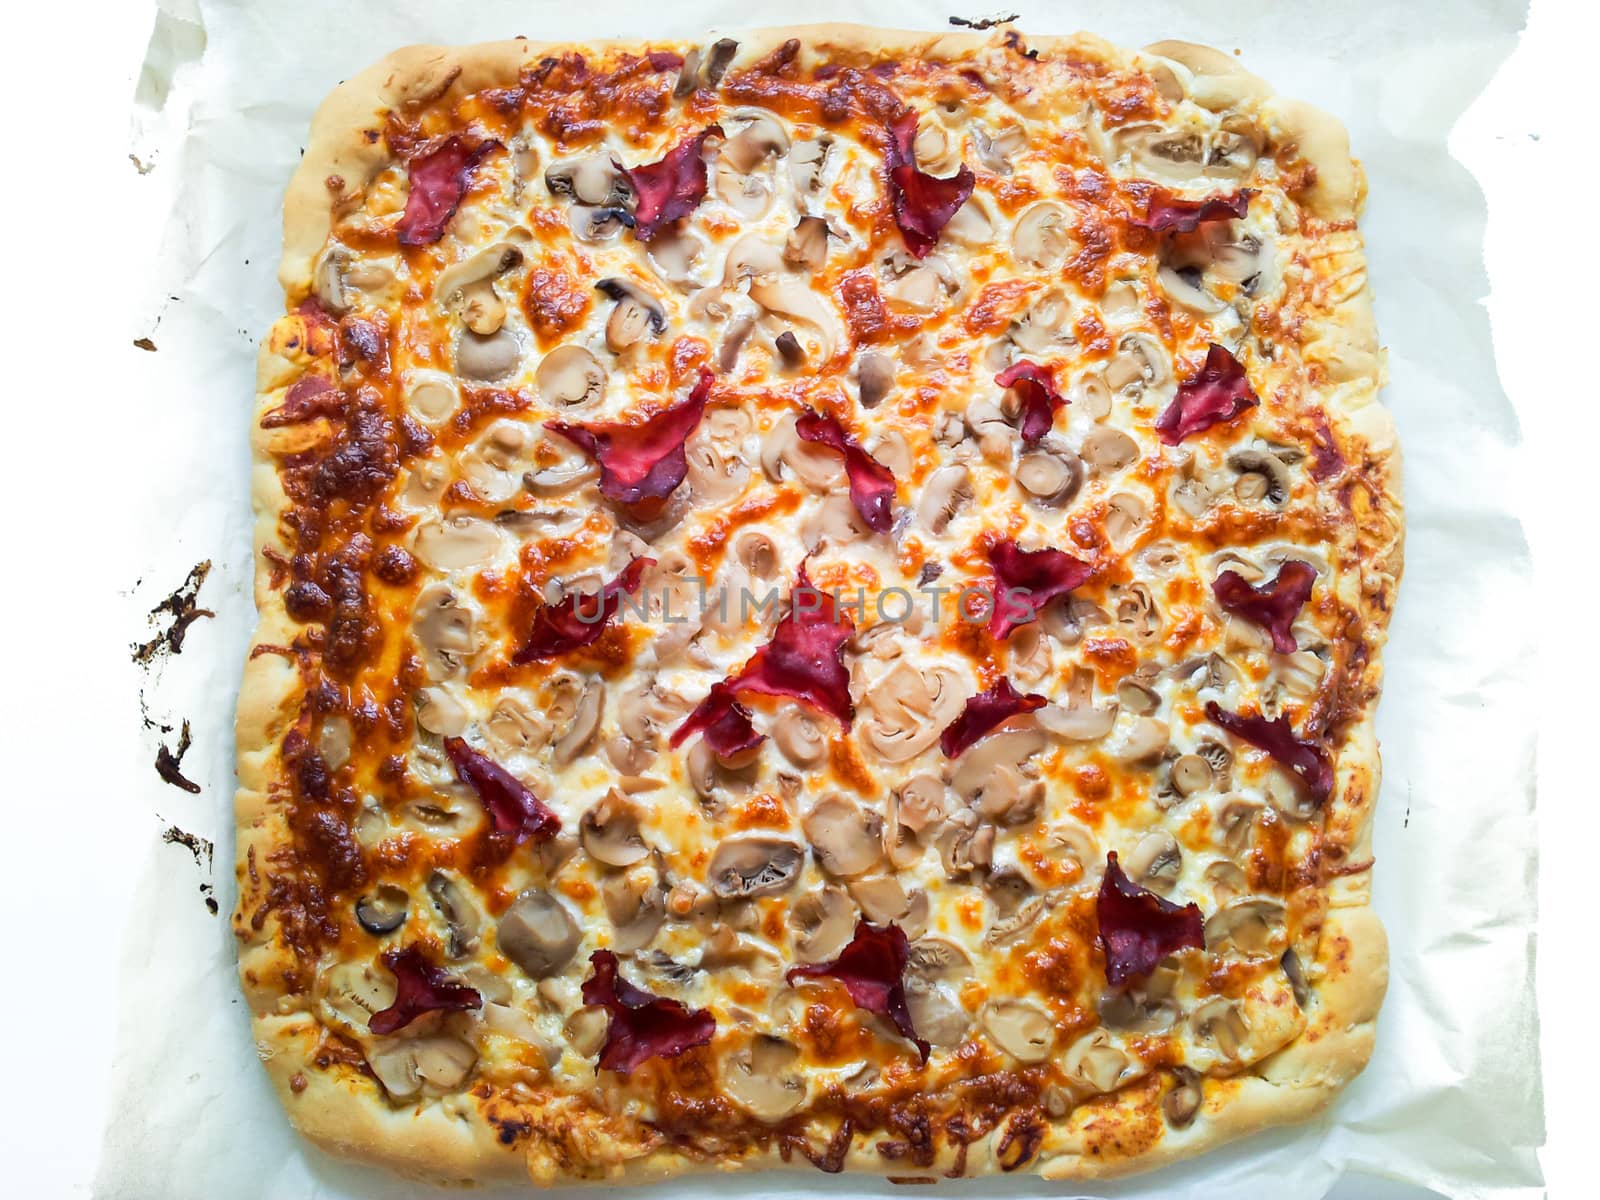 Homemade pizza by Arvebettum